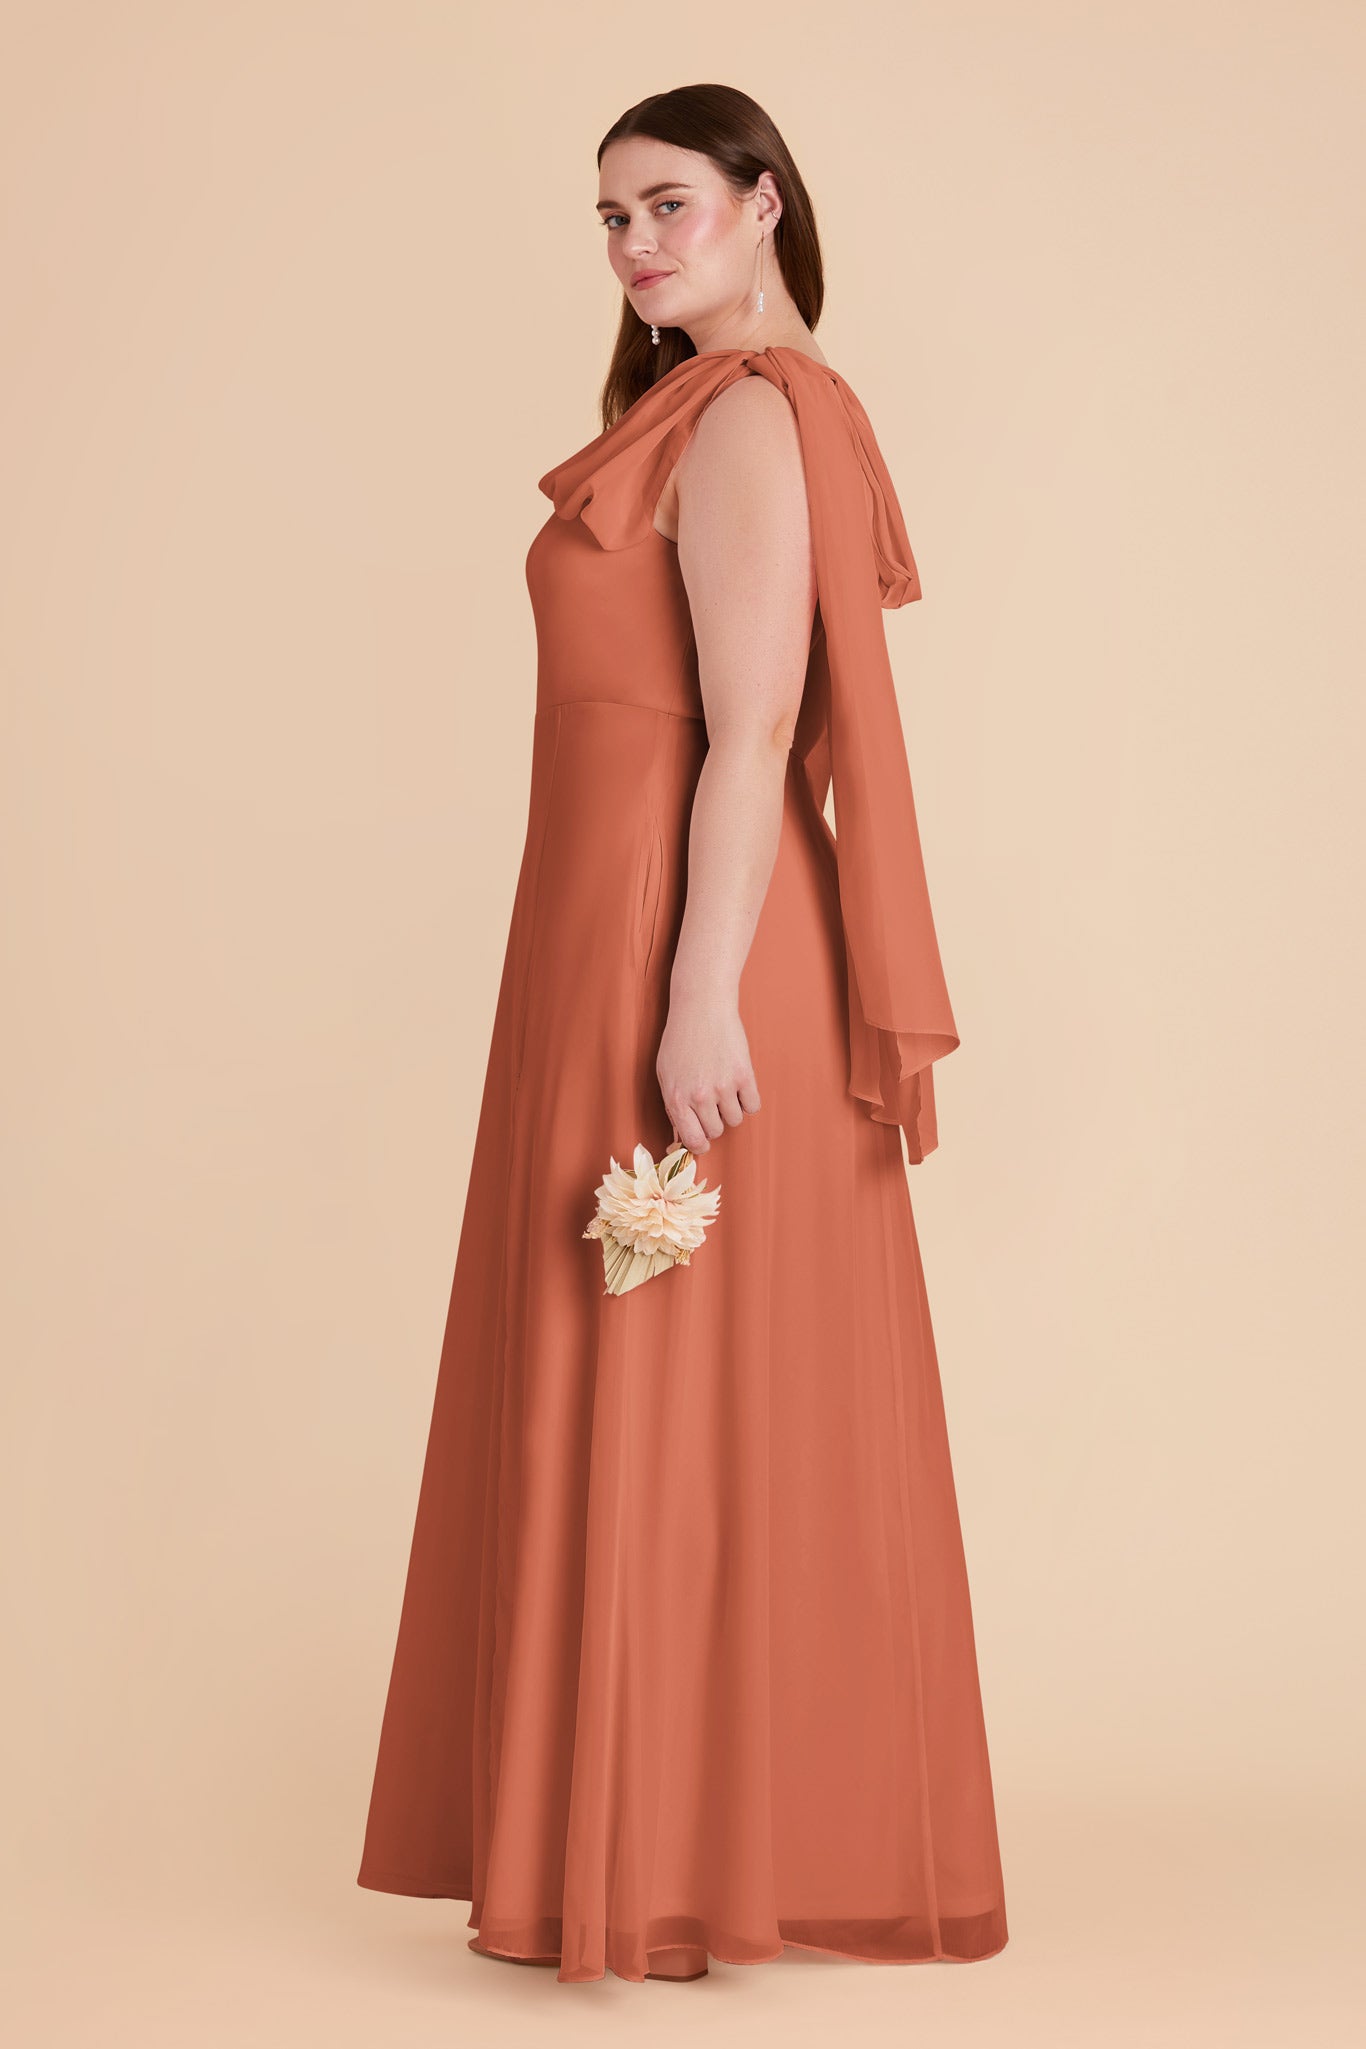 Terracotta Melissa Chiffon Dress by Birdy Grey